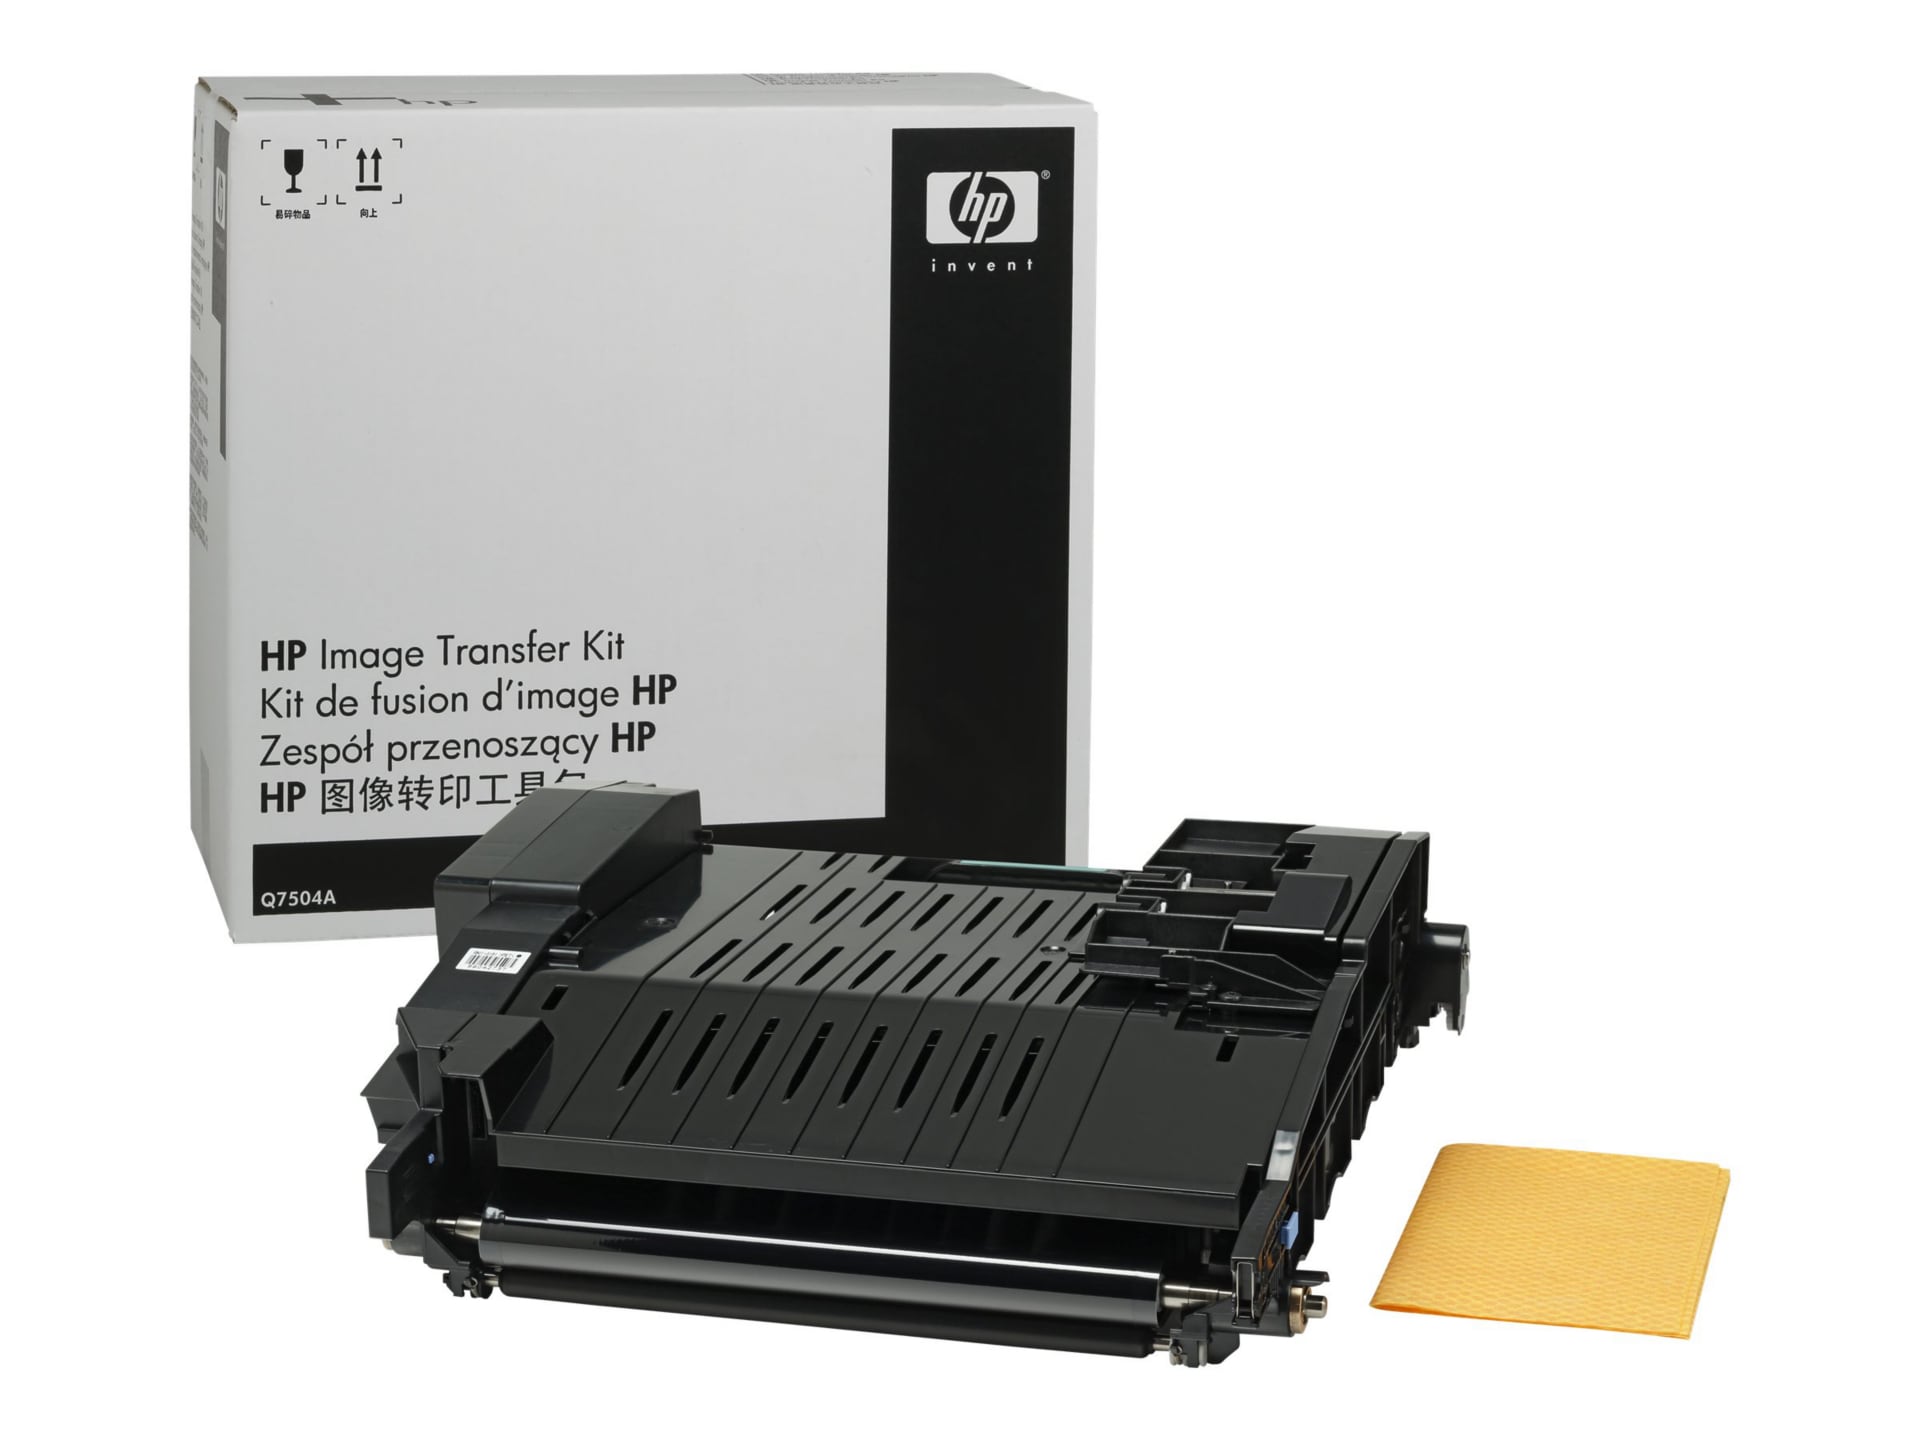 HP Q7504A Color LaserJet Image Transfer Kit